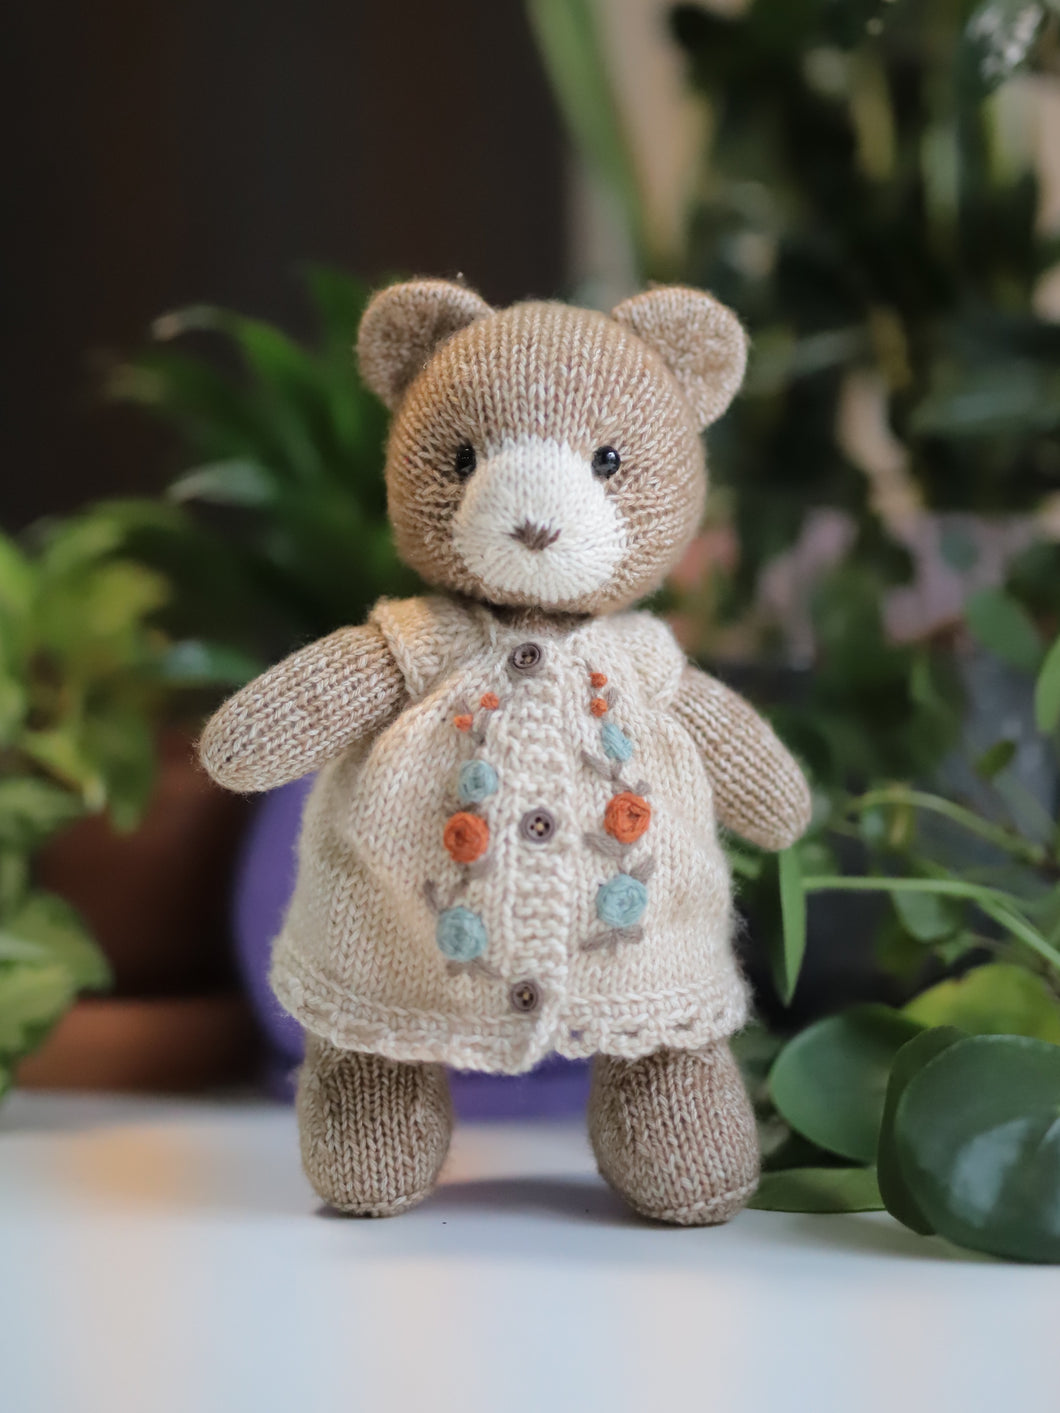 Knitted Teddy bear